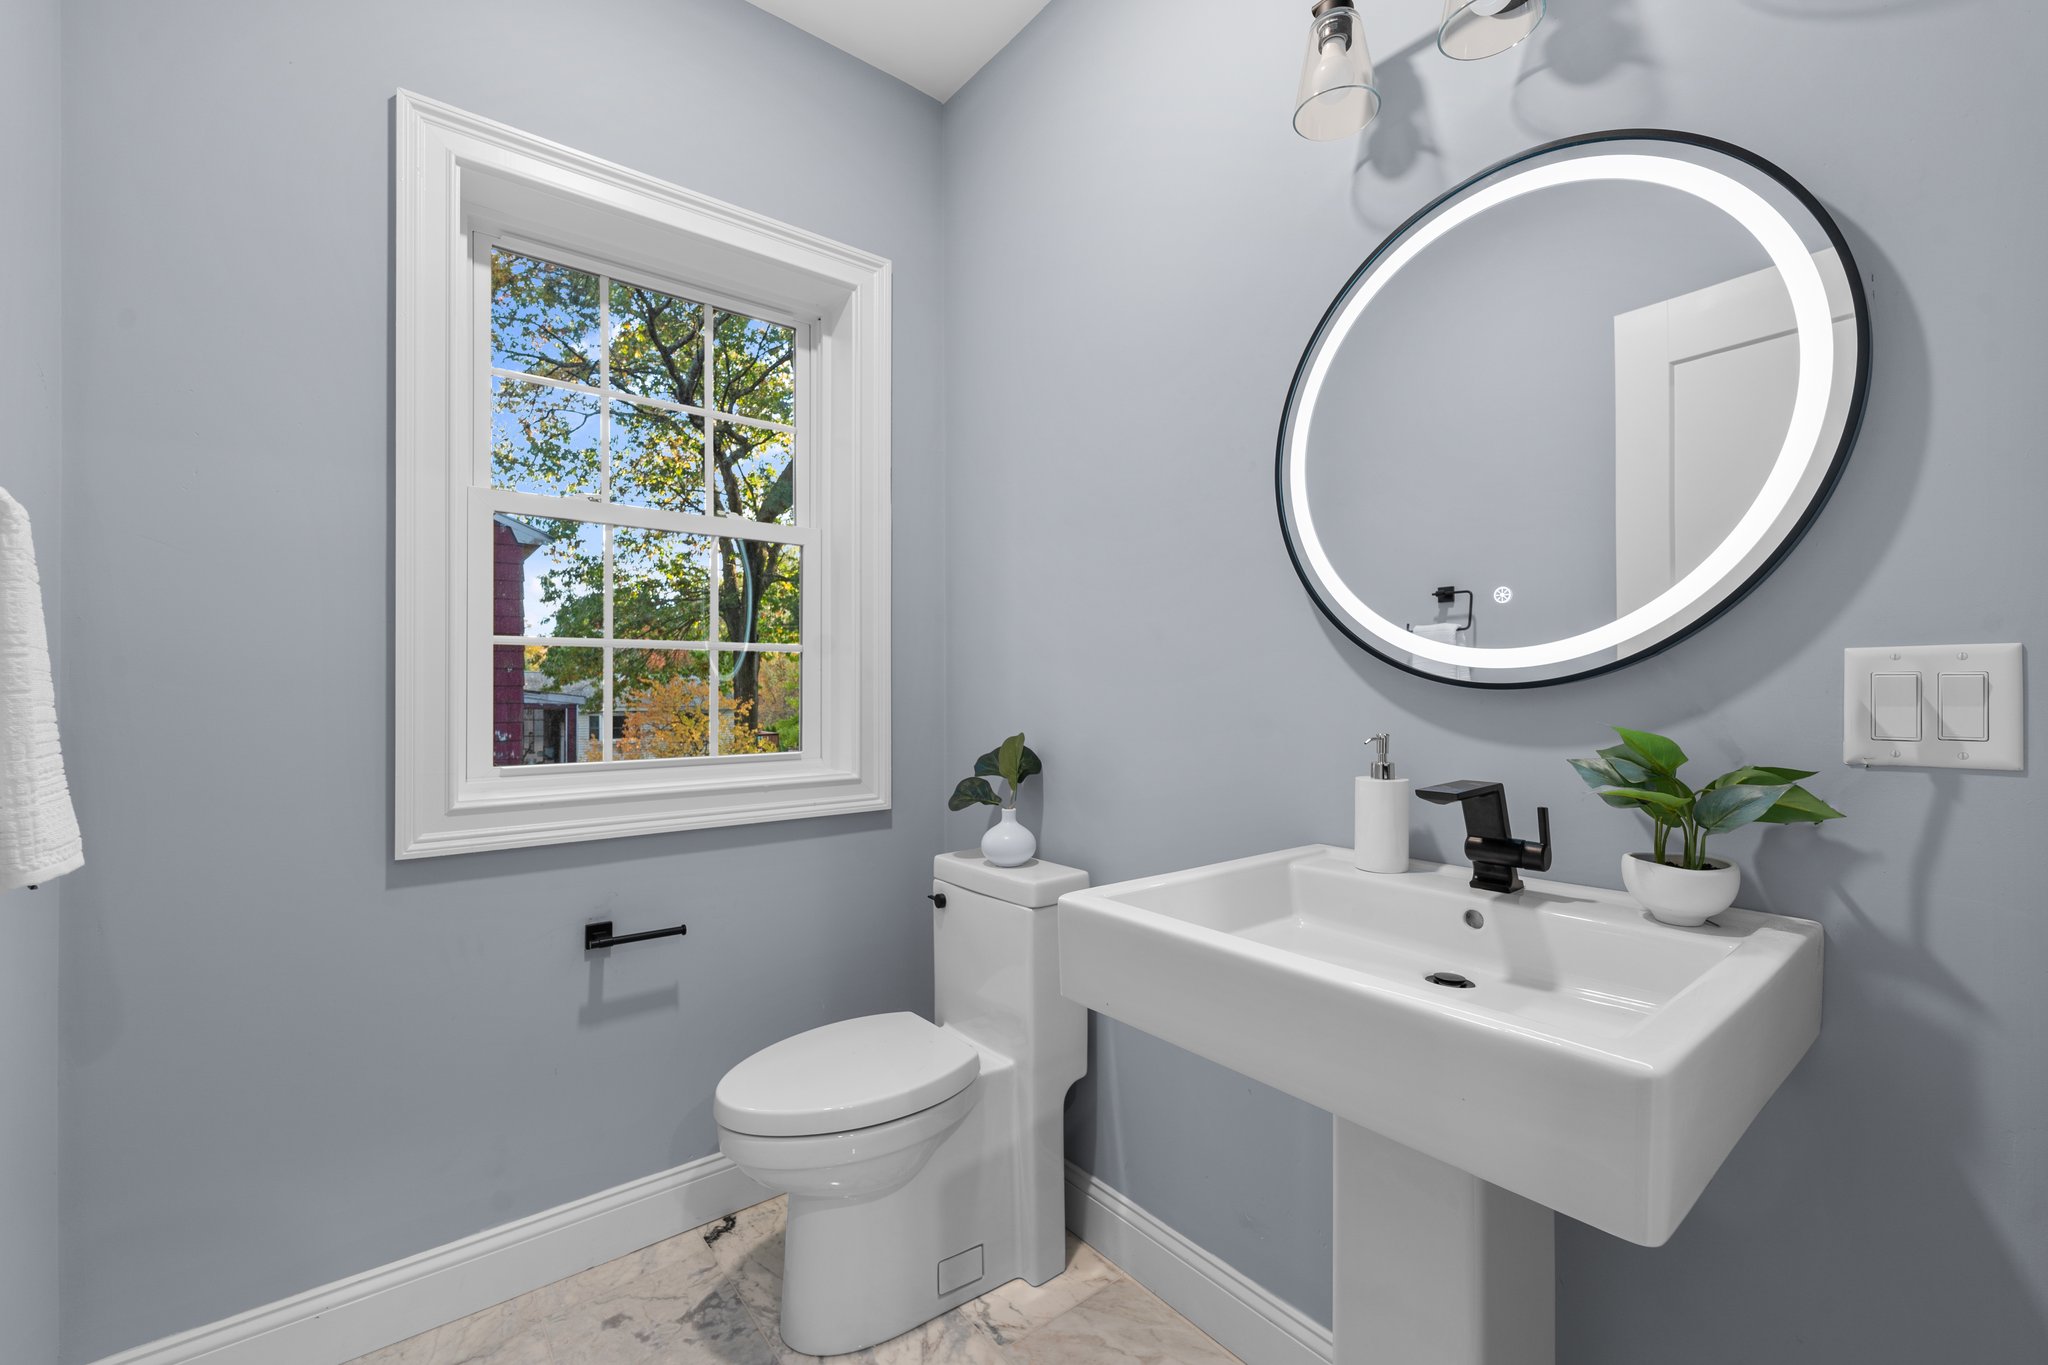 1st Floor Half Bathroom - Tile Floor, Lighted Mirror, Kohler Toilet & Fireclay Pedestal Sink